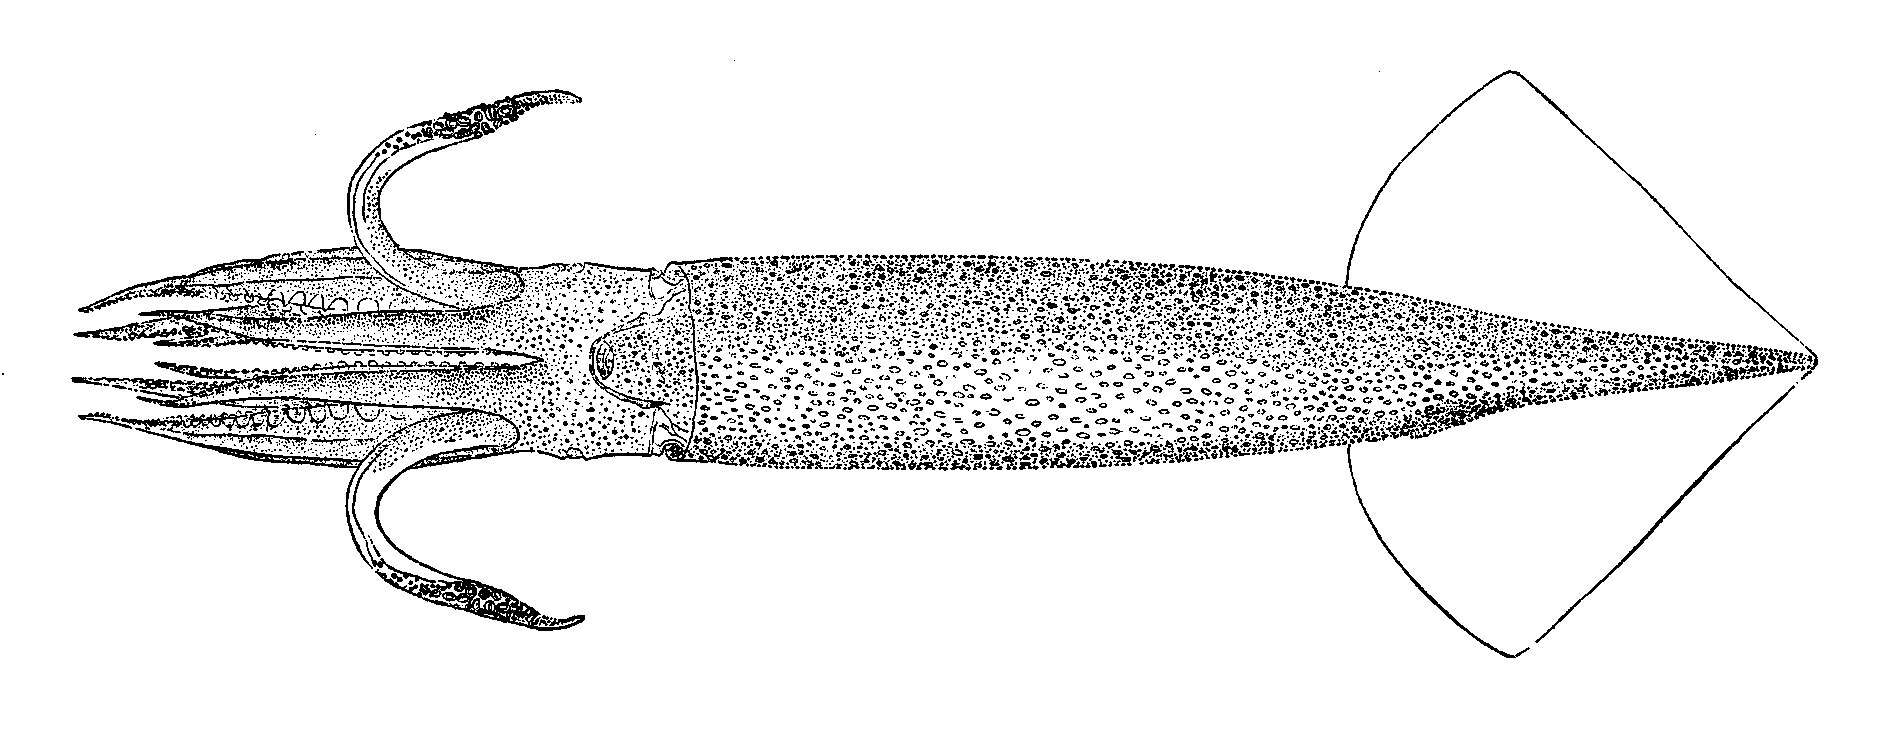 Image of northern shortfin squid